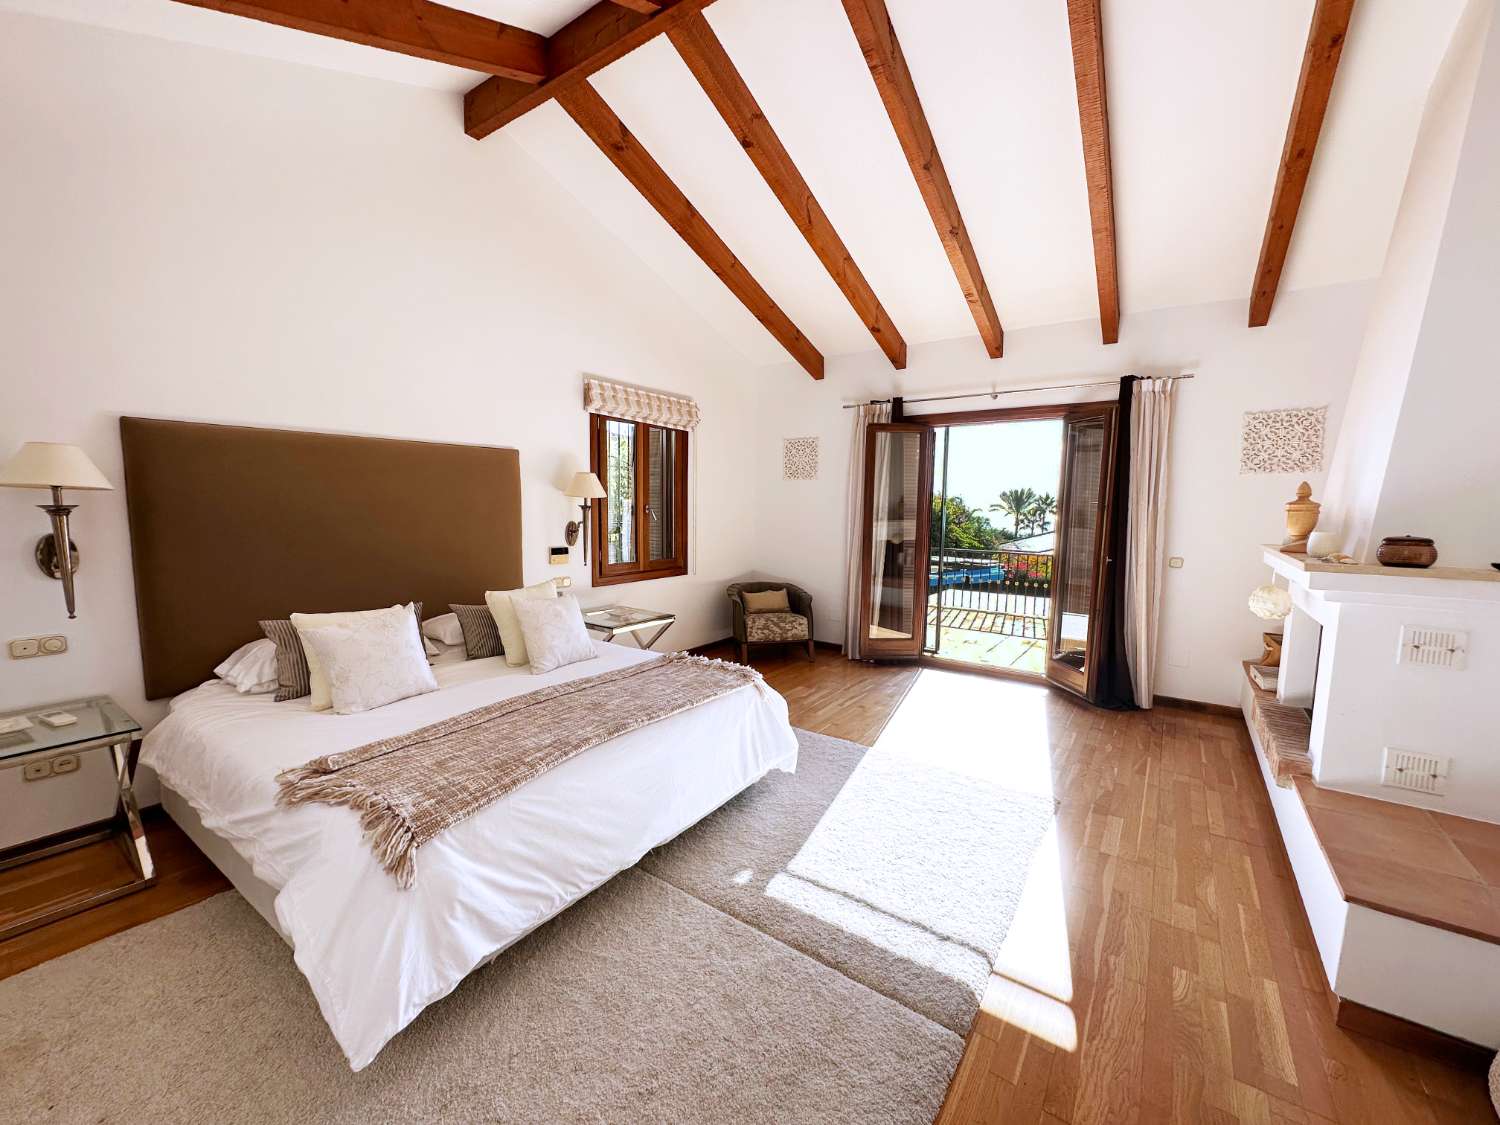 For sale, 6 bedrooms villa in Sierra Blanca, Marbella.  Plot 2,090 m².